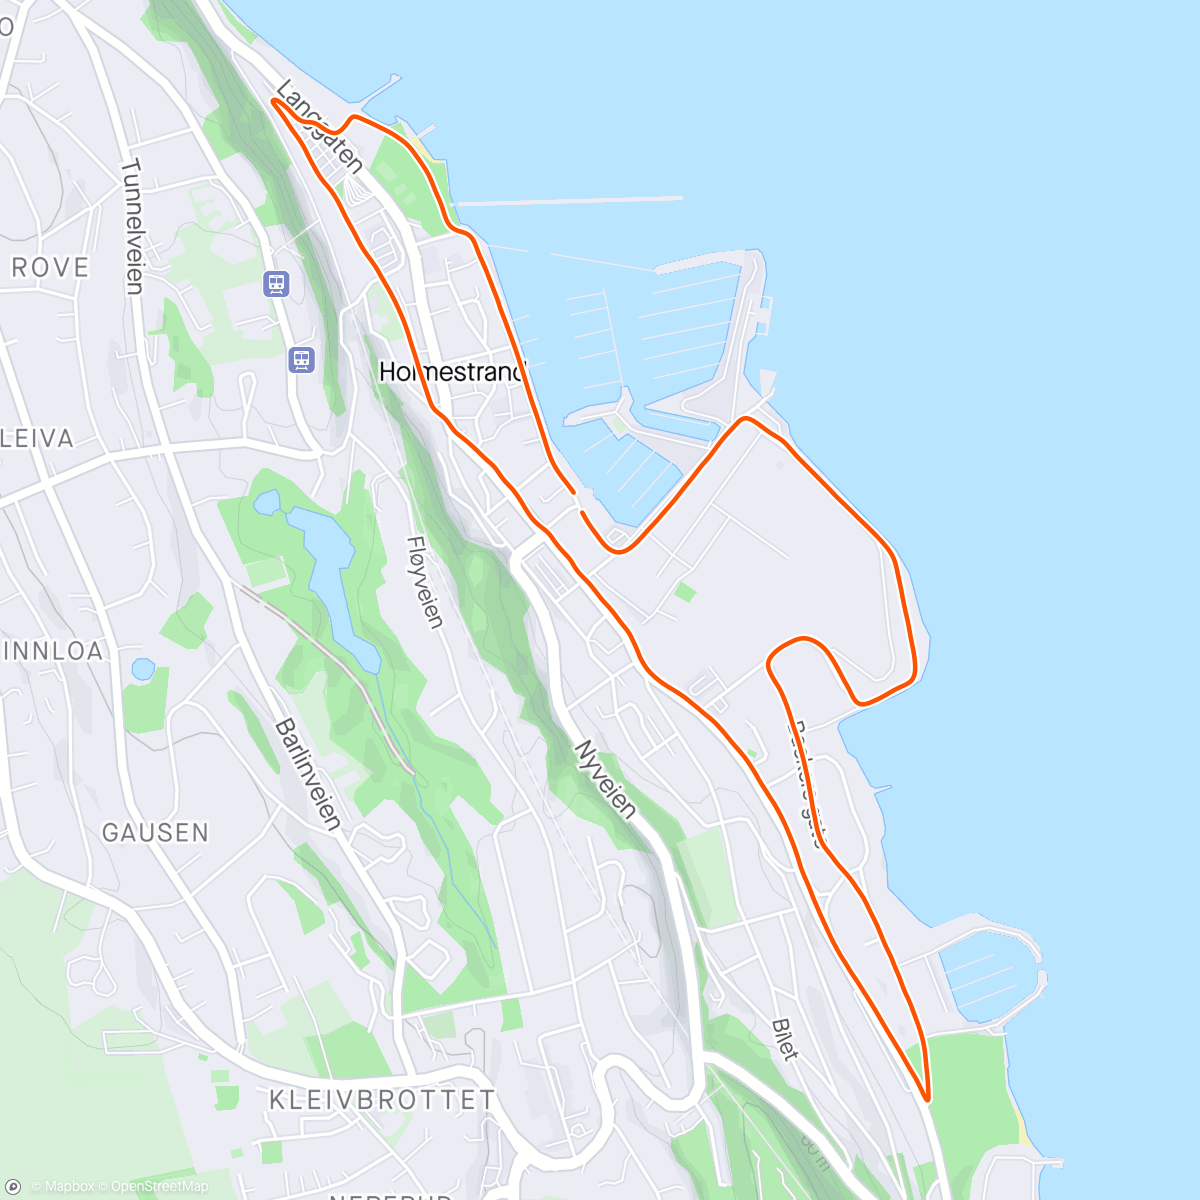 Map of the activity, 5 km Holmestrand maraton 3 plass på Karoline